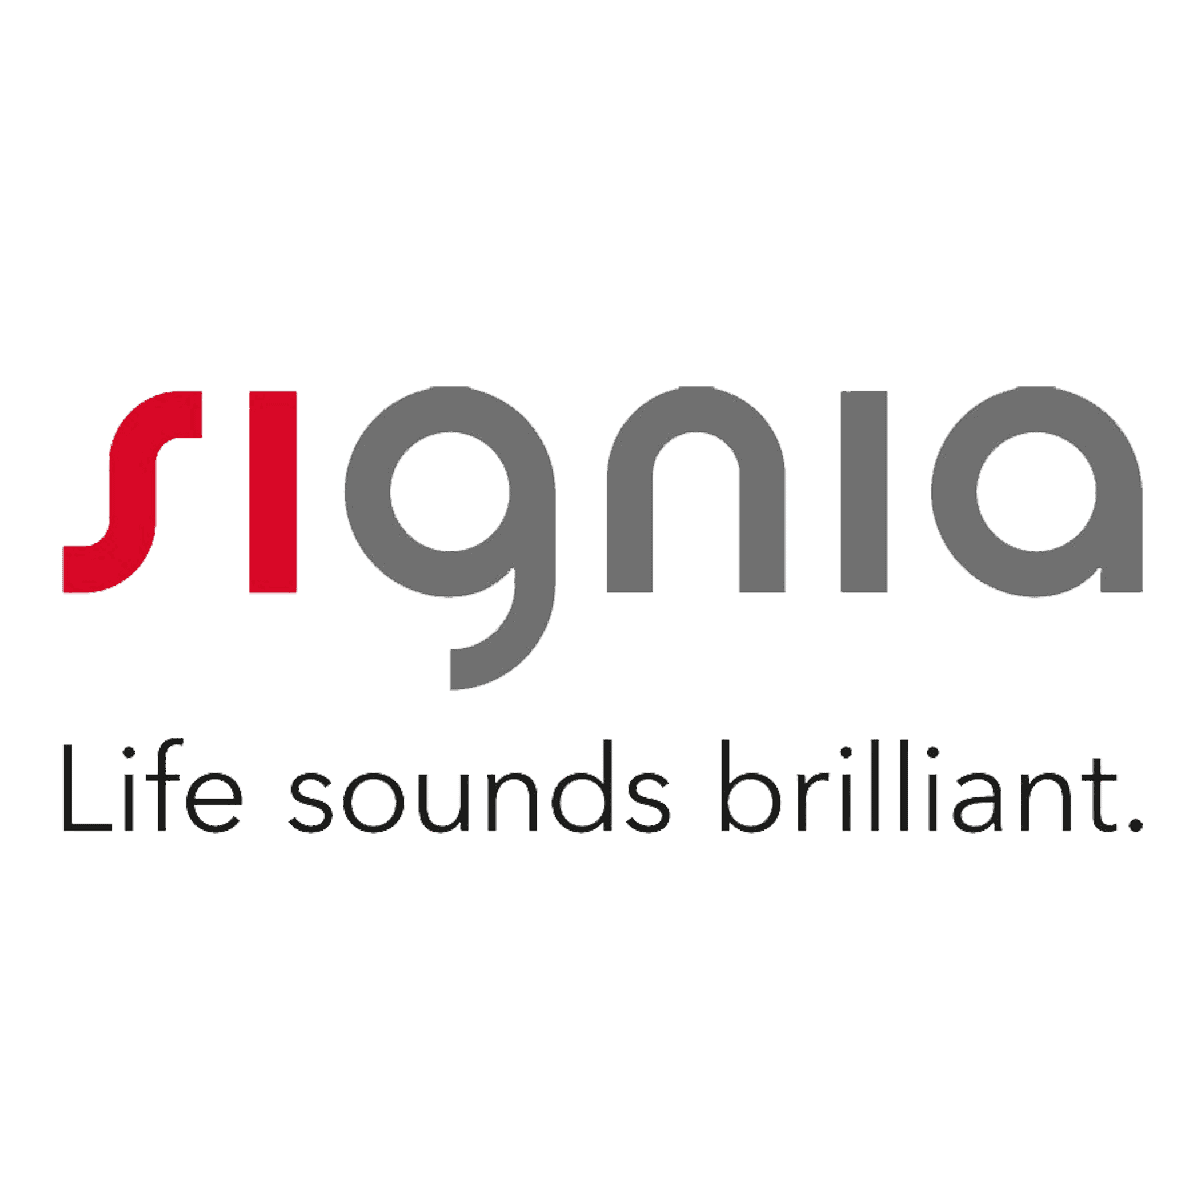 Signia logo displaying "Signia-Life sounds brilliant"